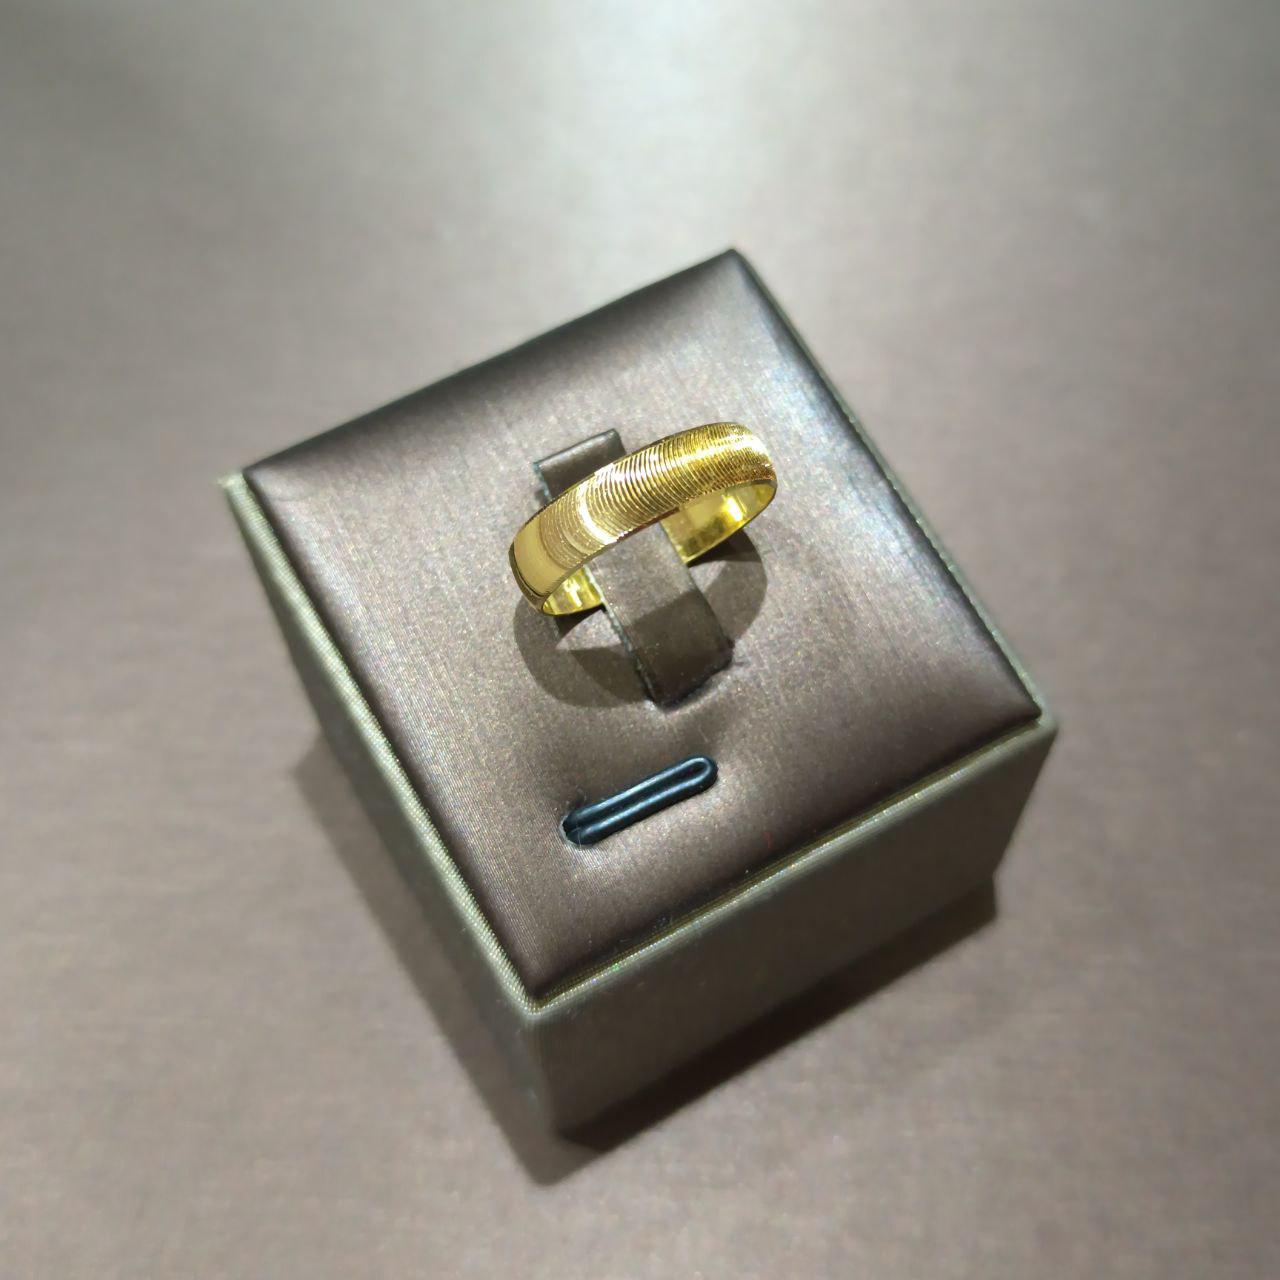 916 / 22k Gold Cat Eye Ring-916 gold-Best Gold Shop